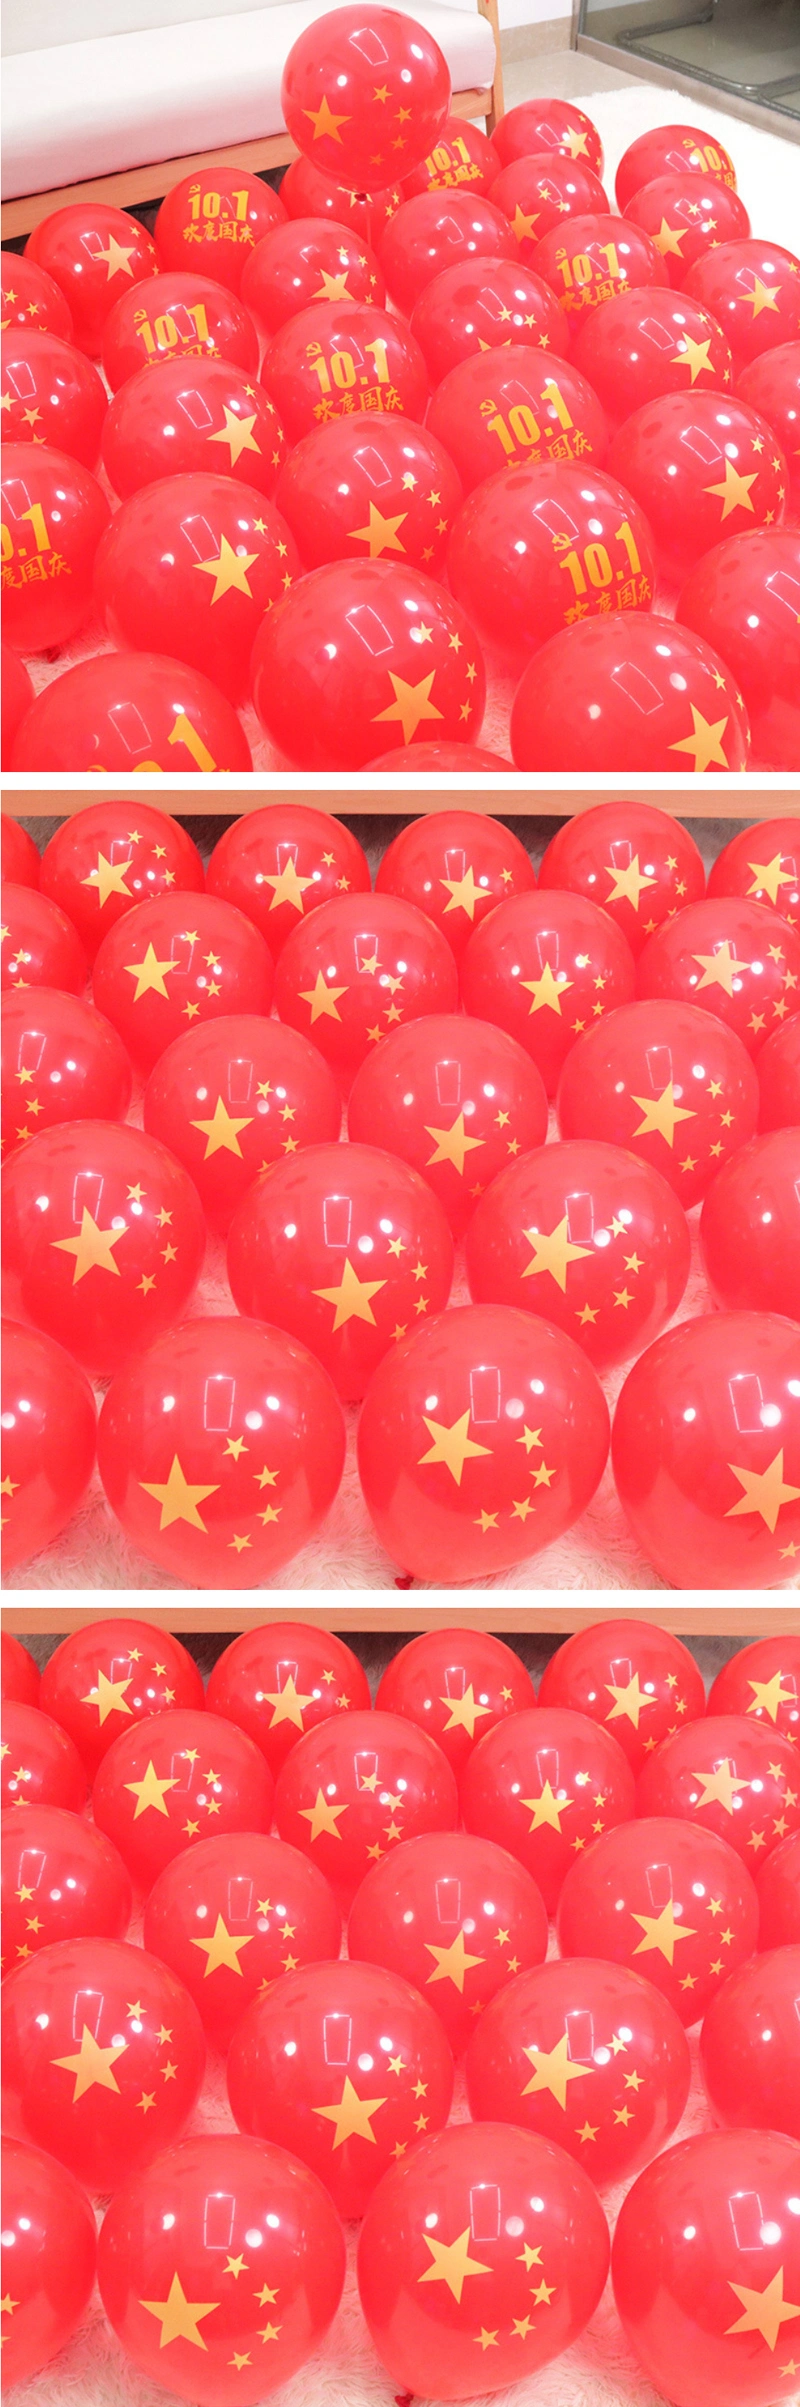 Give Away Printed Party Balloon Helium Balloon Inflatable Balloon Foil Balloon Rubber Balloon Latex Balloon National Day Balloon